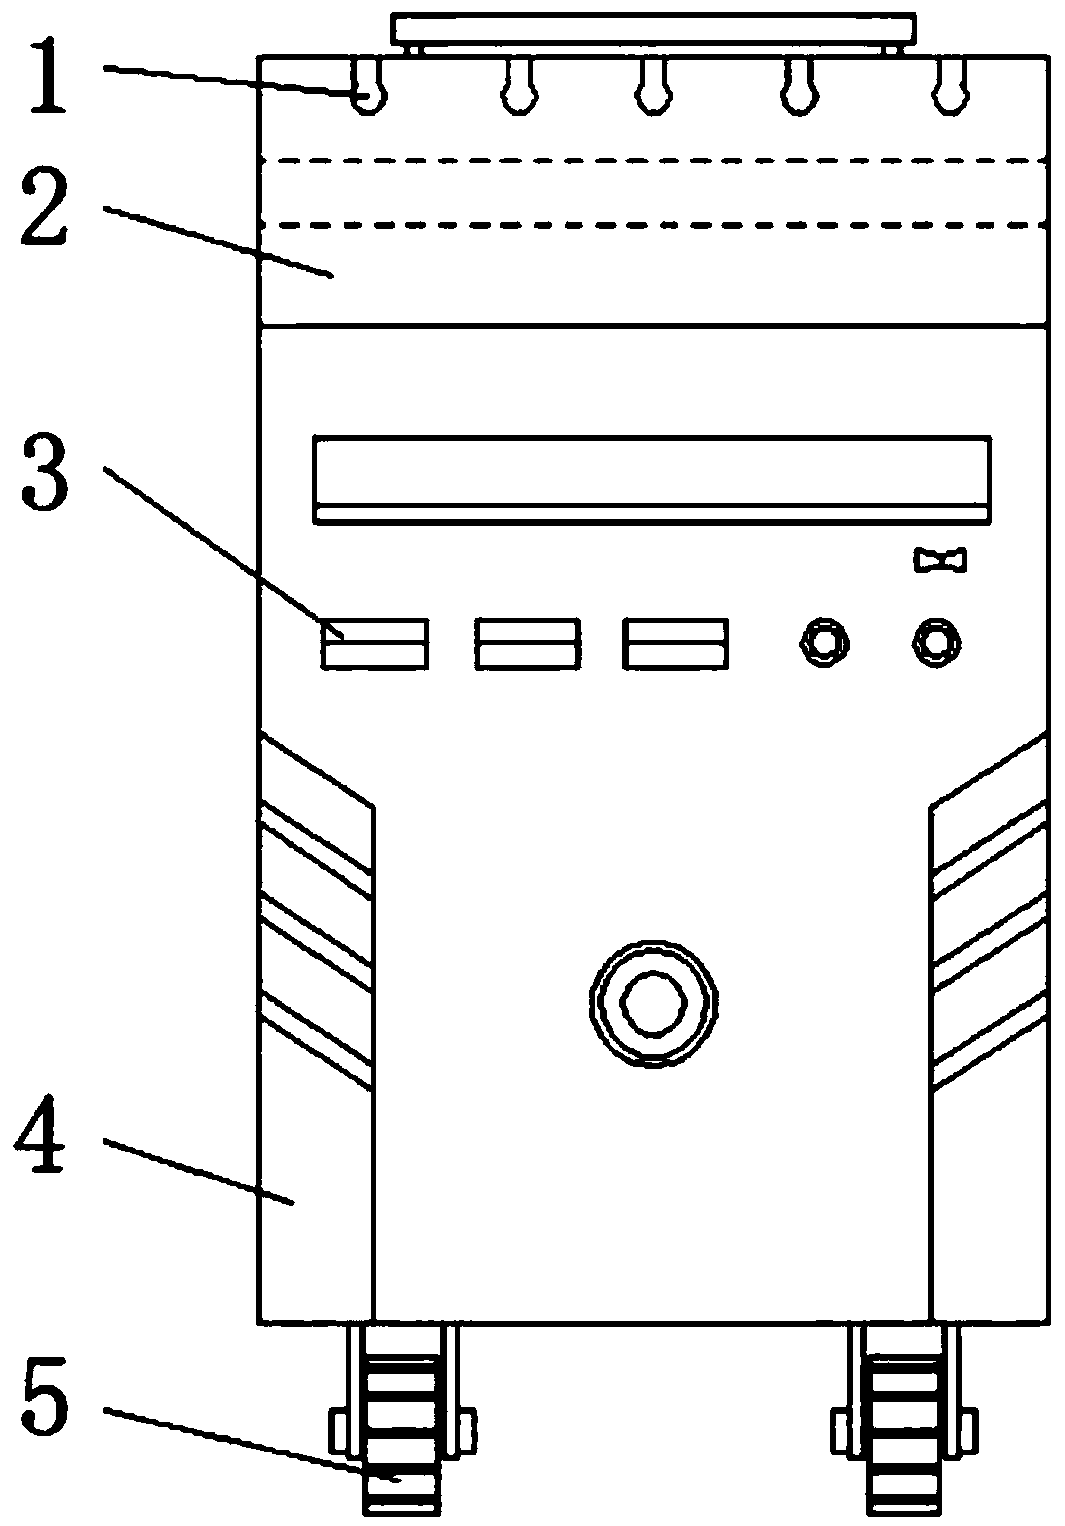 Computer apparatus capable of conveniently adjusting display screen